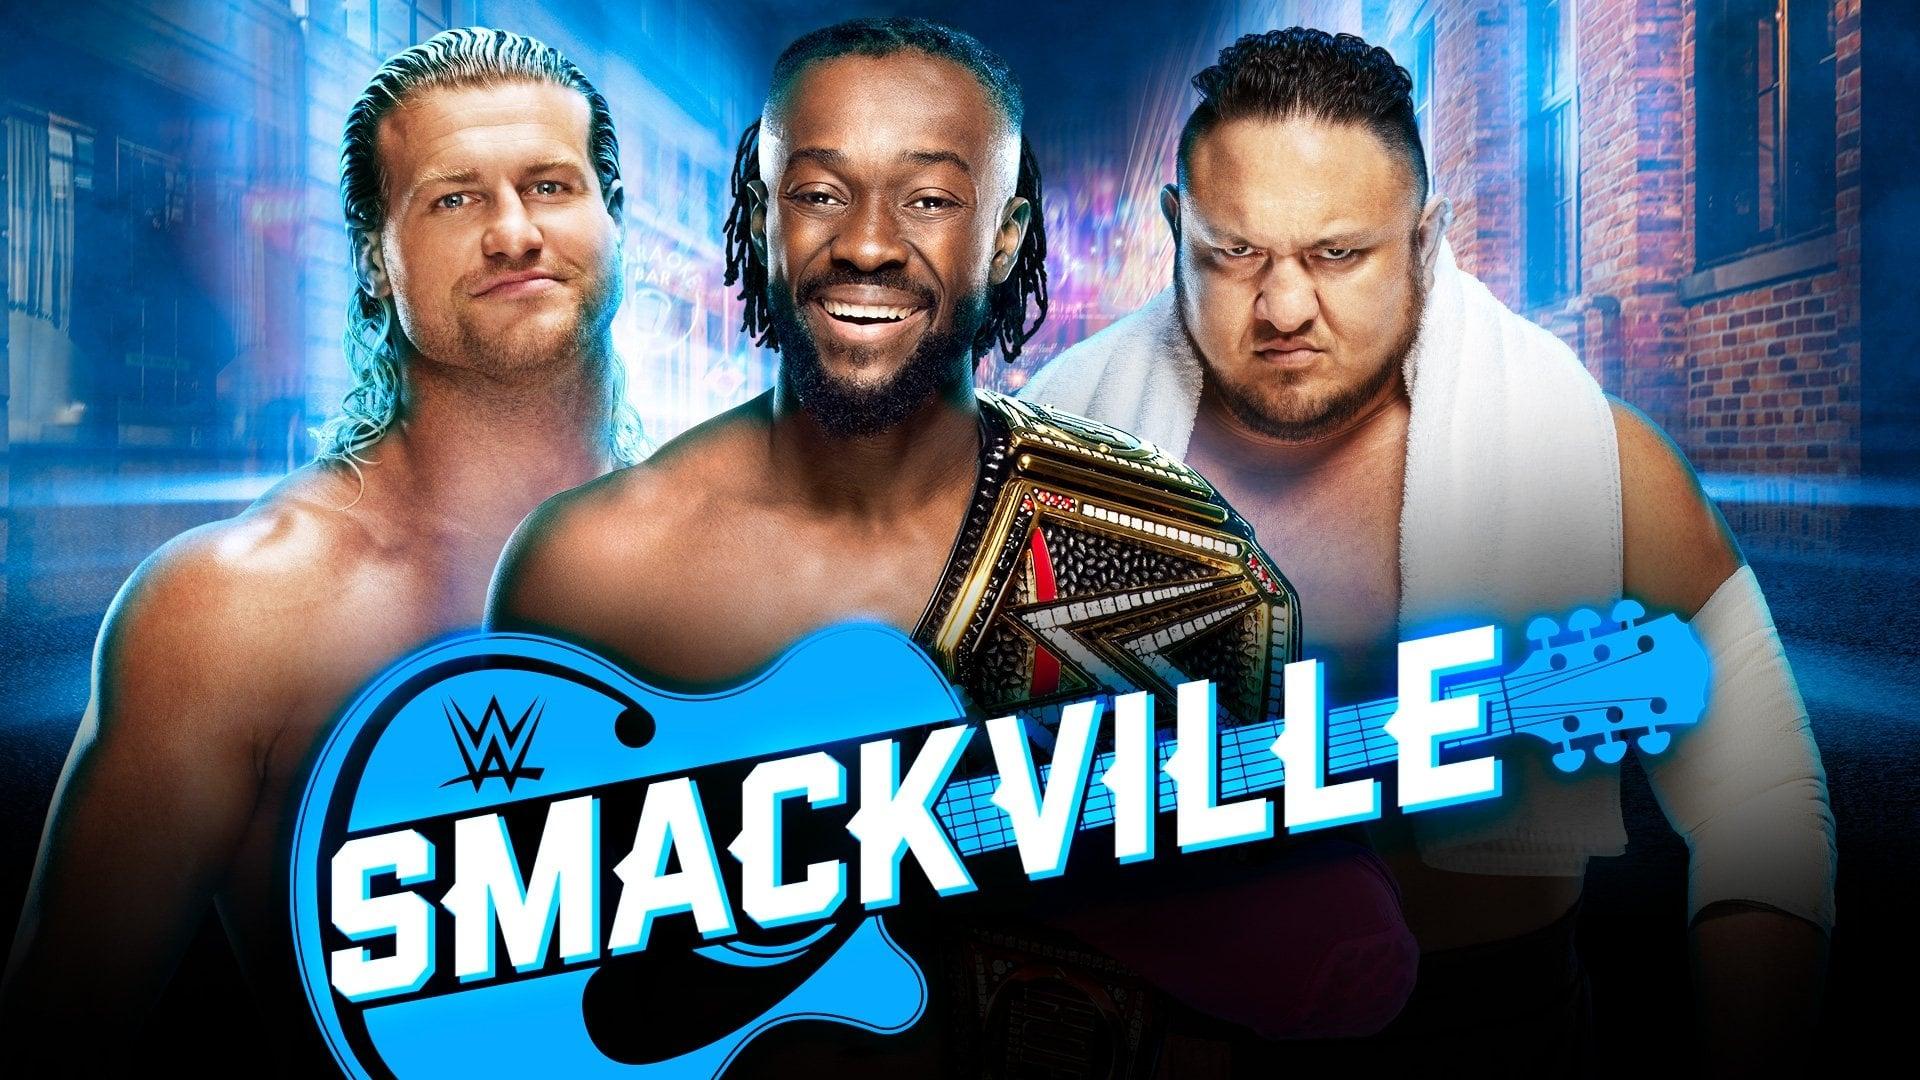 WWE Smackville backdrop